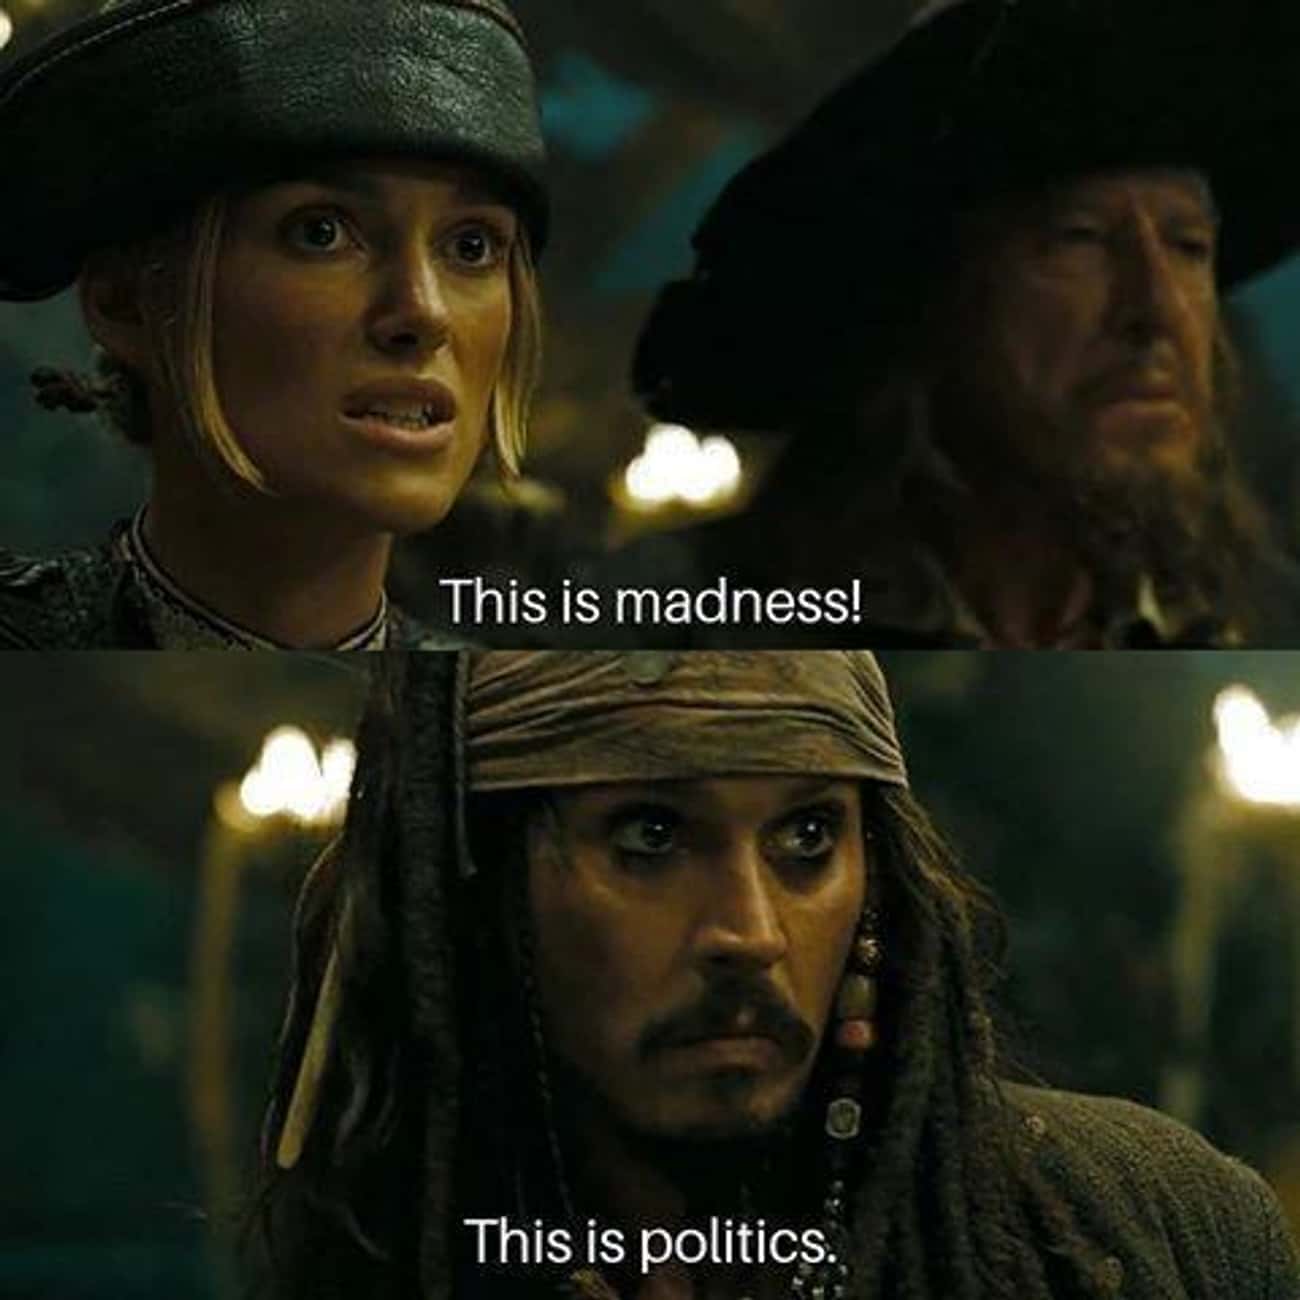 Politics = Madness